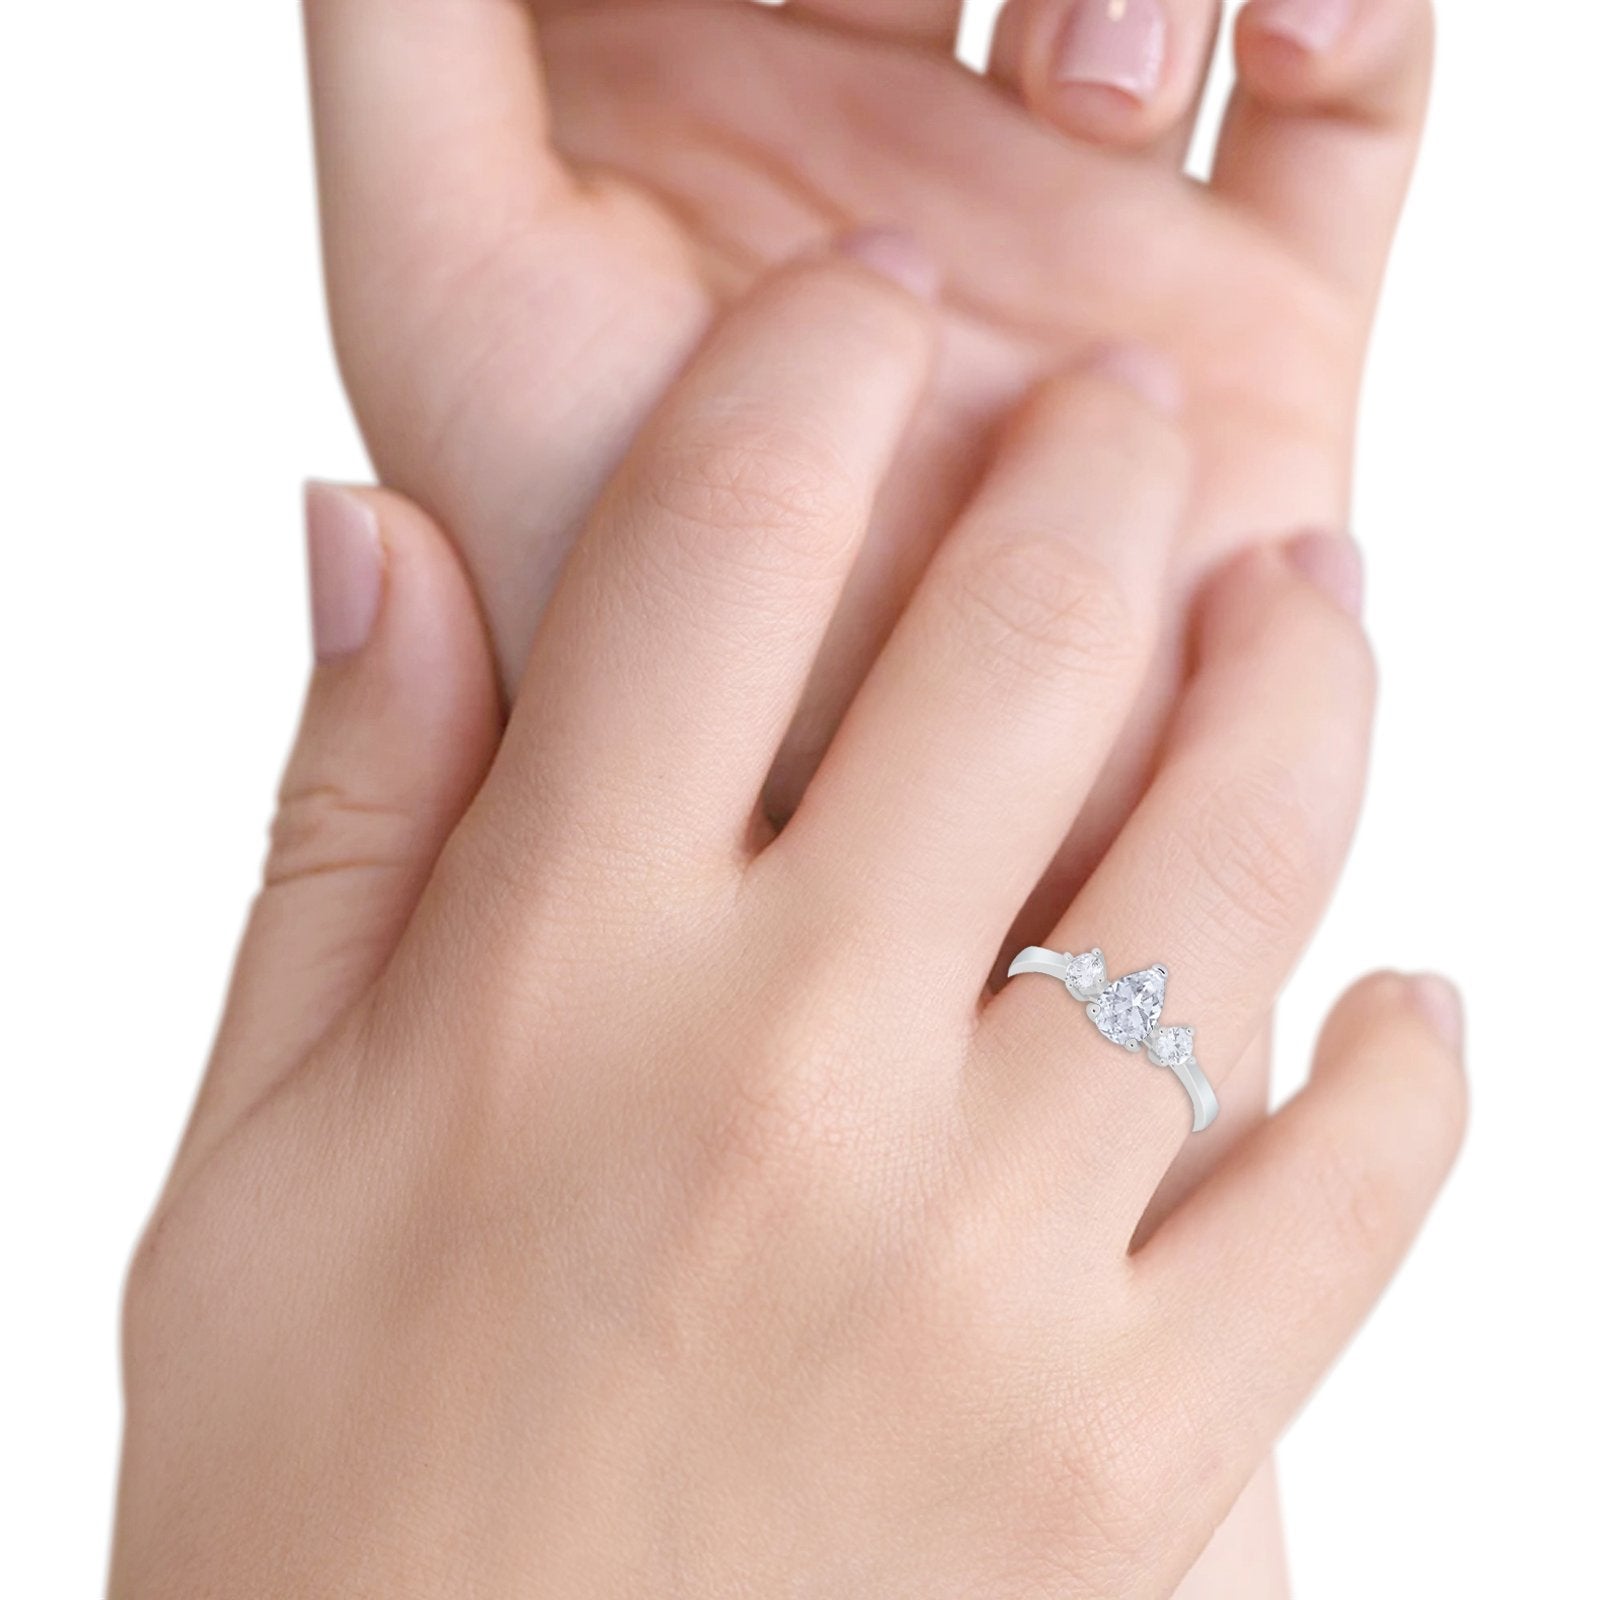 Teardrop Three Stone Wedding Ring Pear Simulated Cubic Zirconia 925 Sterling Silver